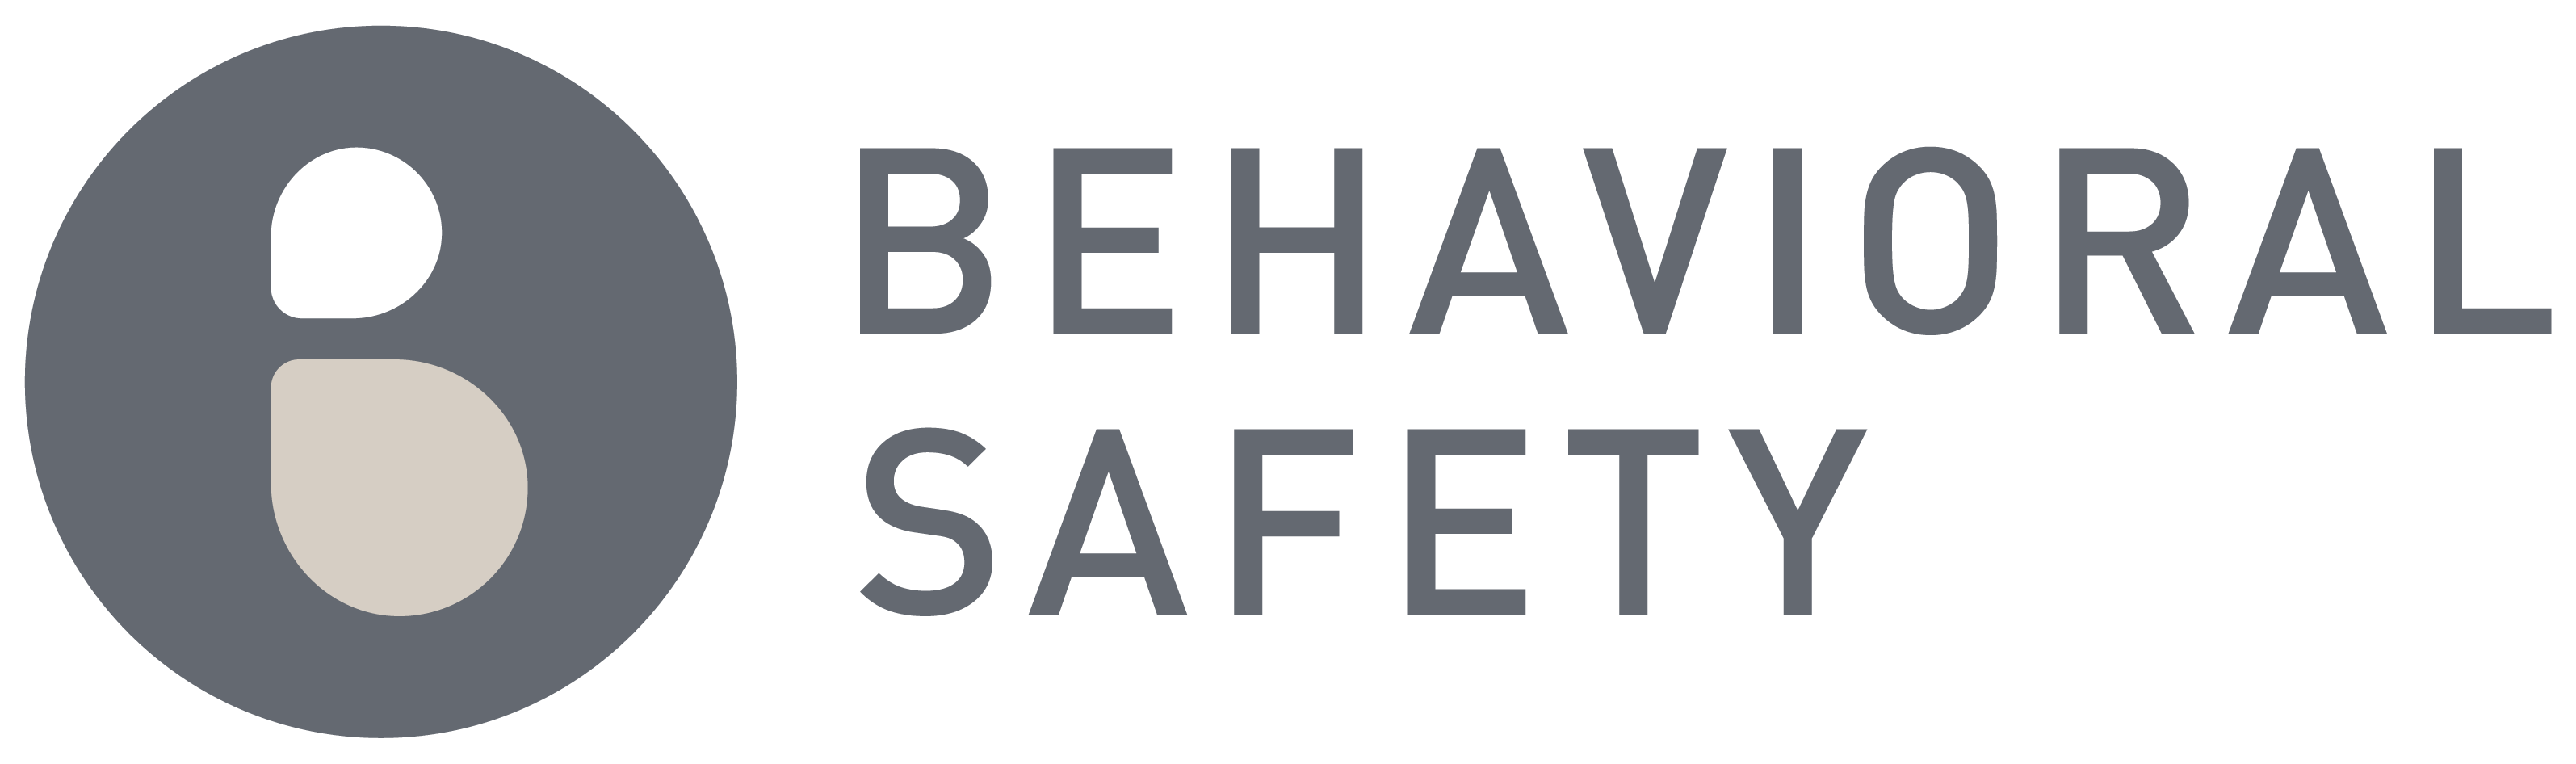 Behavioral Safety Products | Ligature Resistant